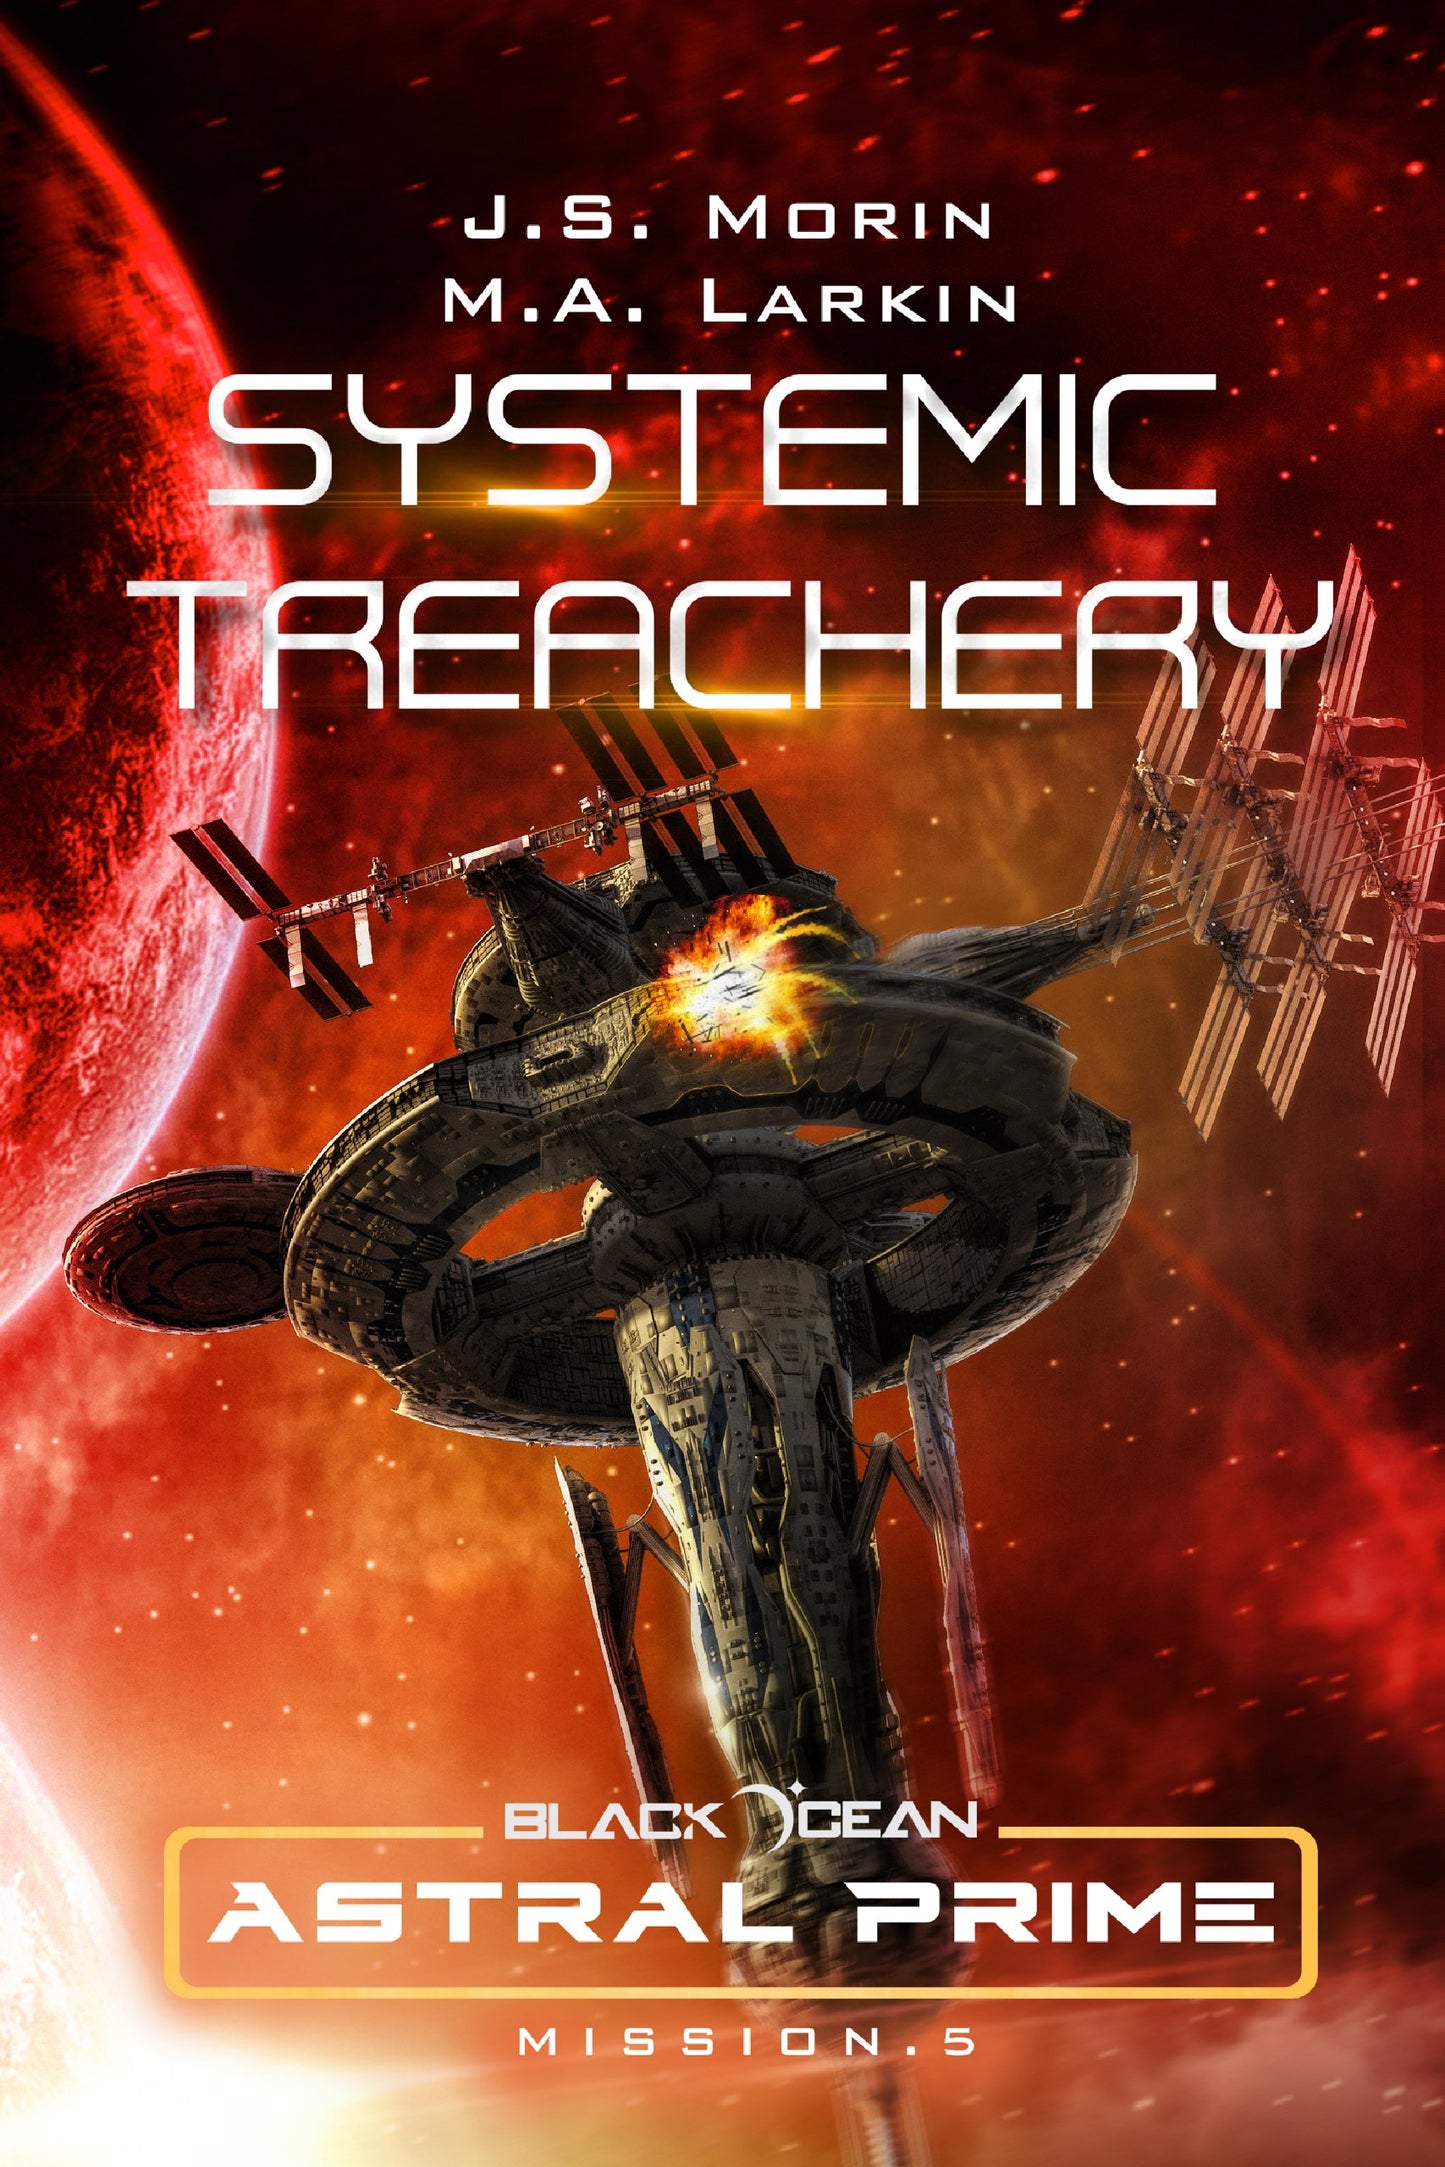 Systemic Treachery, Black Ocean: Astral Prime Mission 5